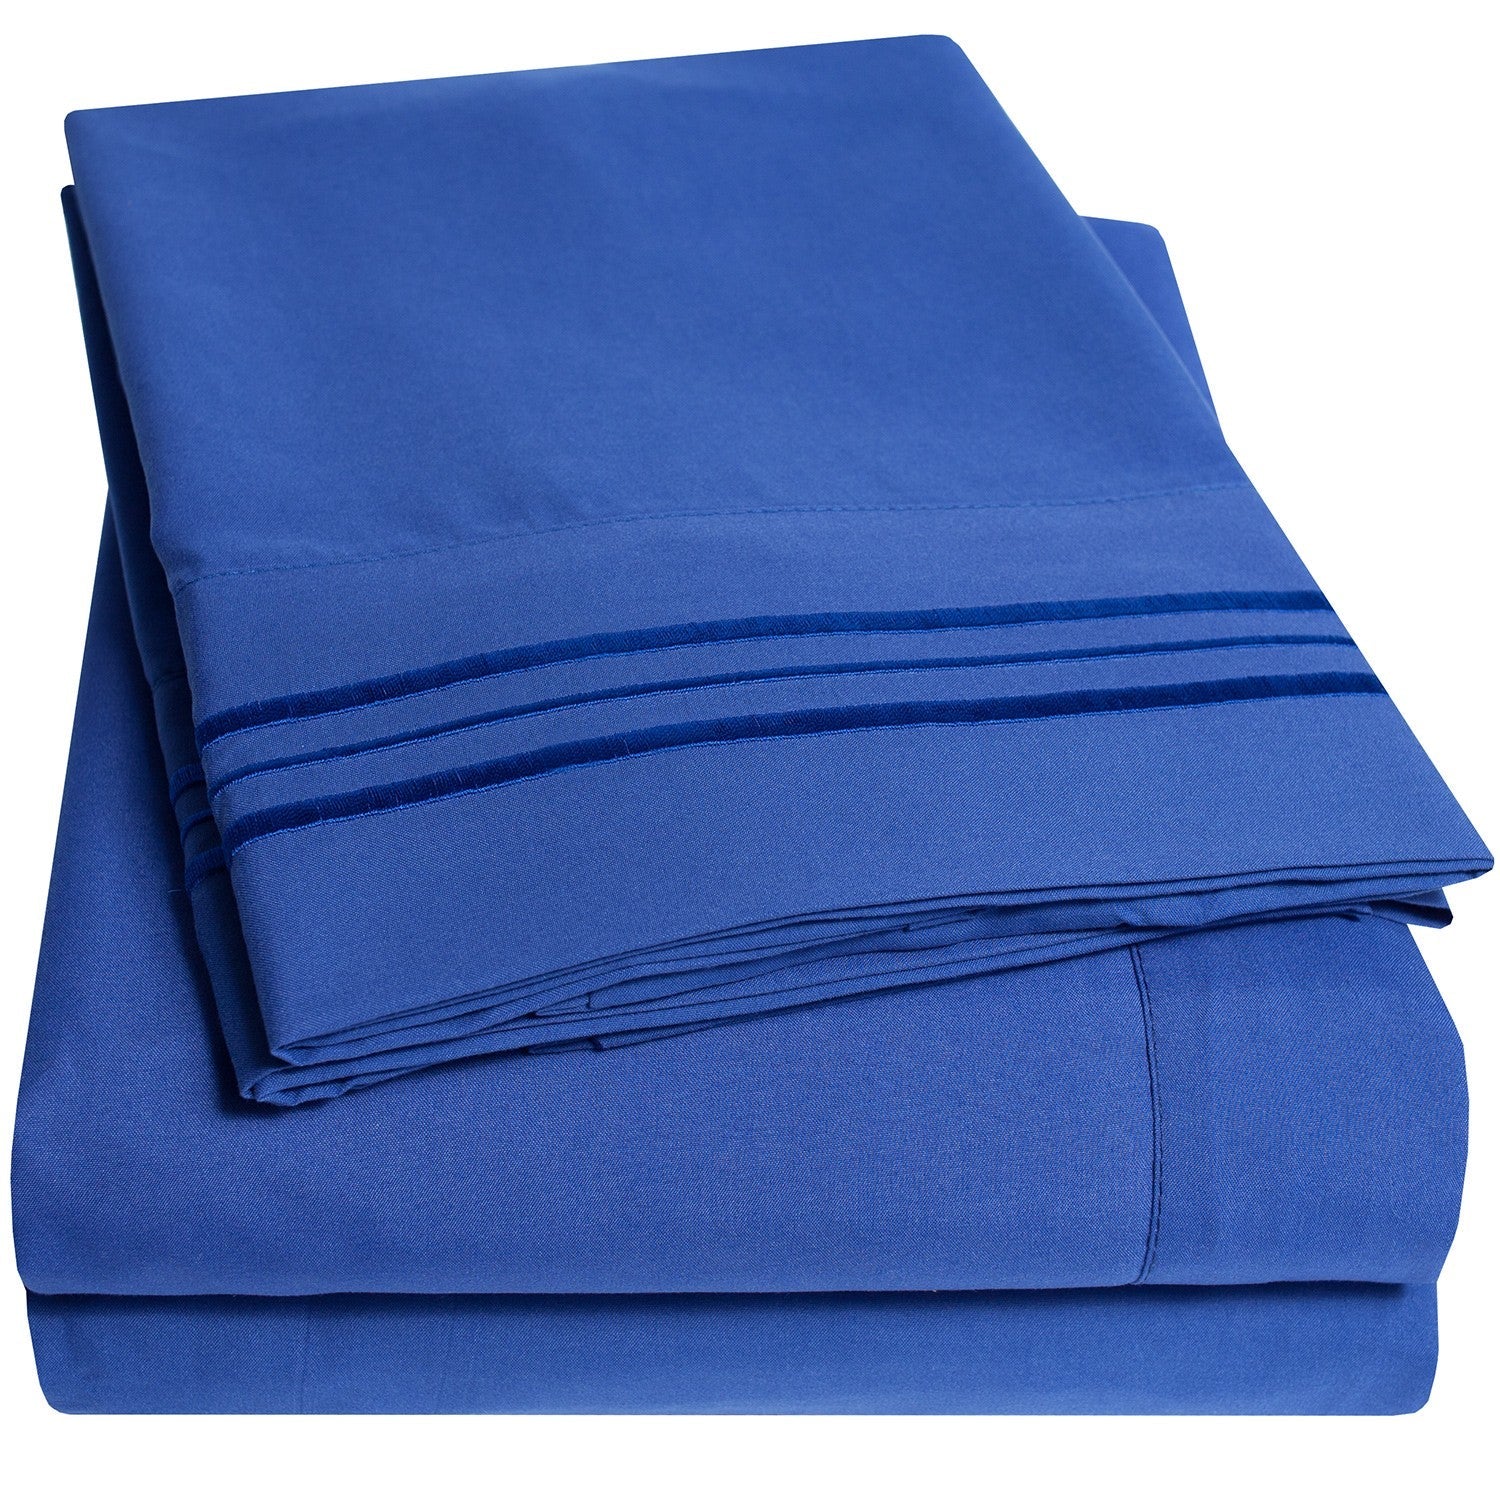 Classic 4-Piece Bed Sheet Set (Royal Blue) - Folded